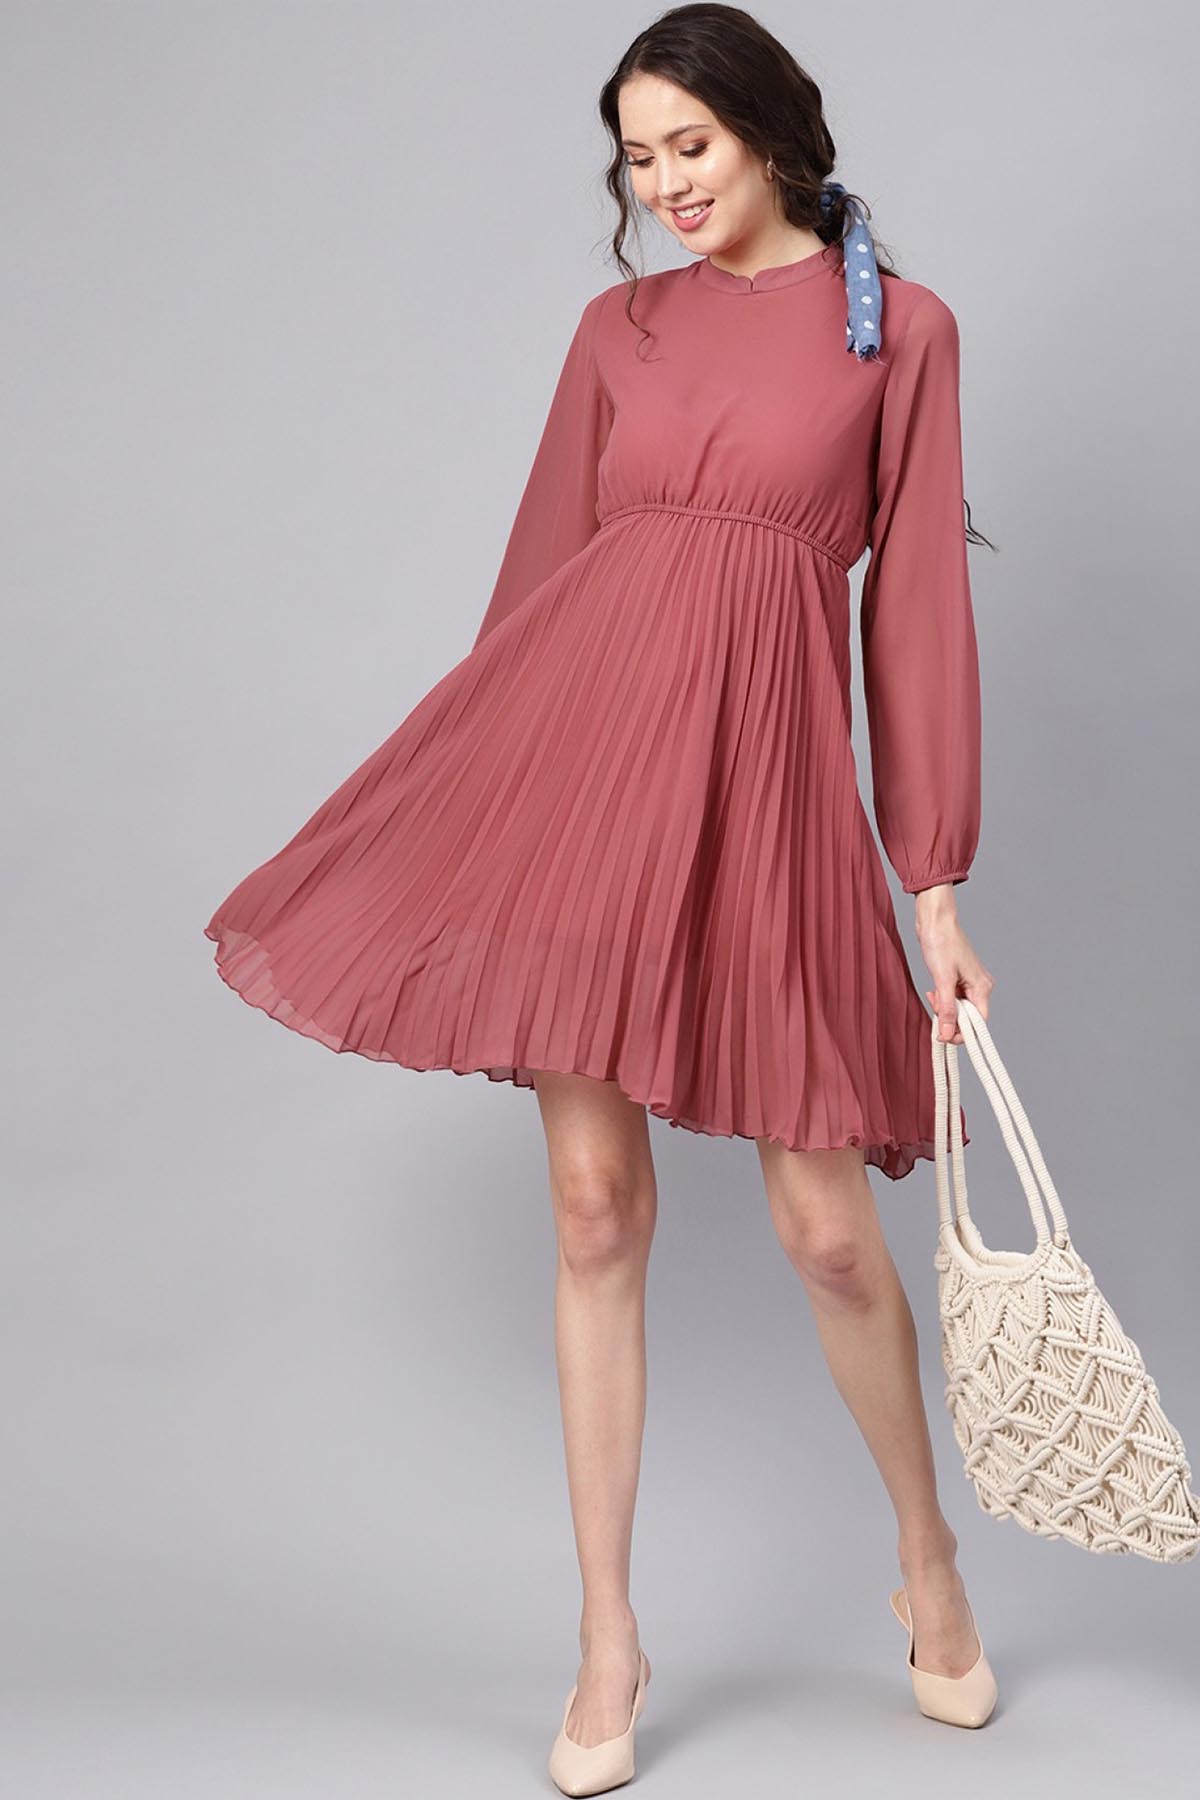 Peach Dress - Buy Peach Dresses For Women & Girls Online - Myntra